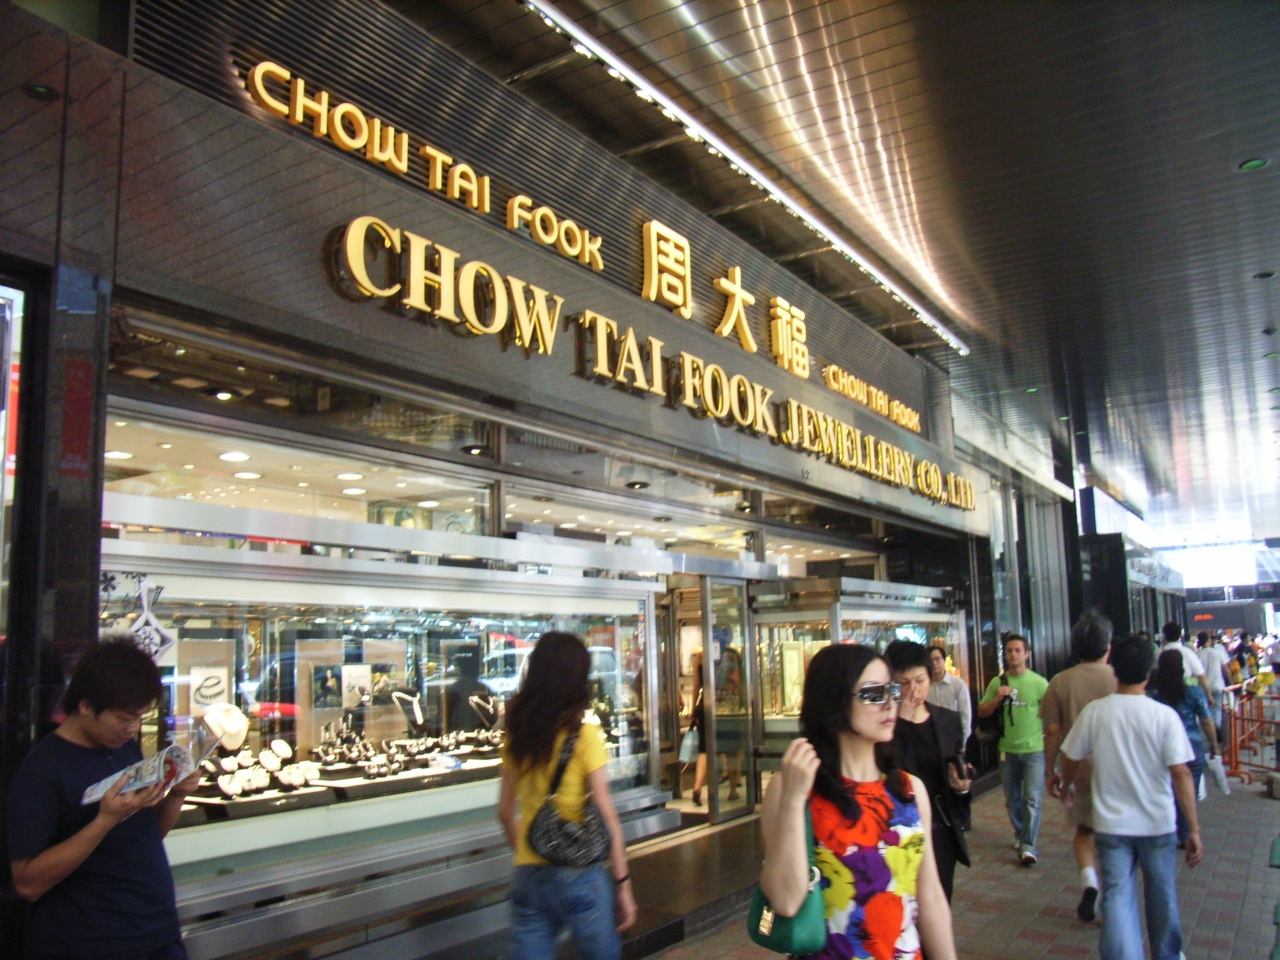   Chow Tai Fook  2017     3,9%